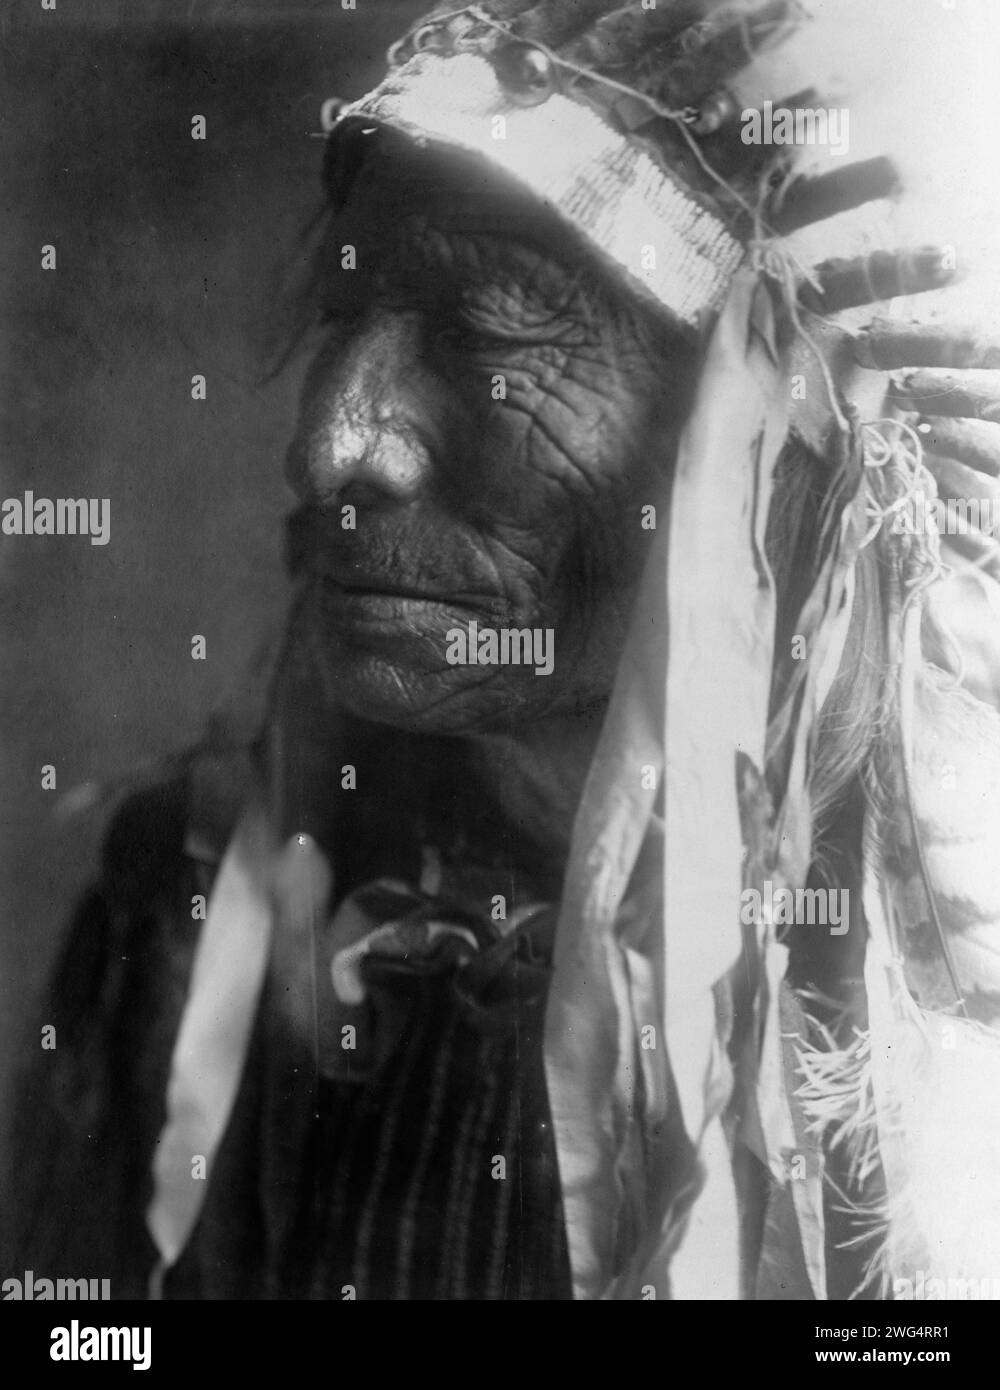 Fast Elk (Hexaka Luzahan), c1907. American Indian man, head-and-shoulders portrait, facing left. Stock Photo